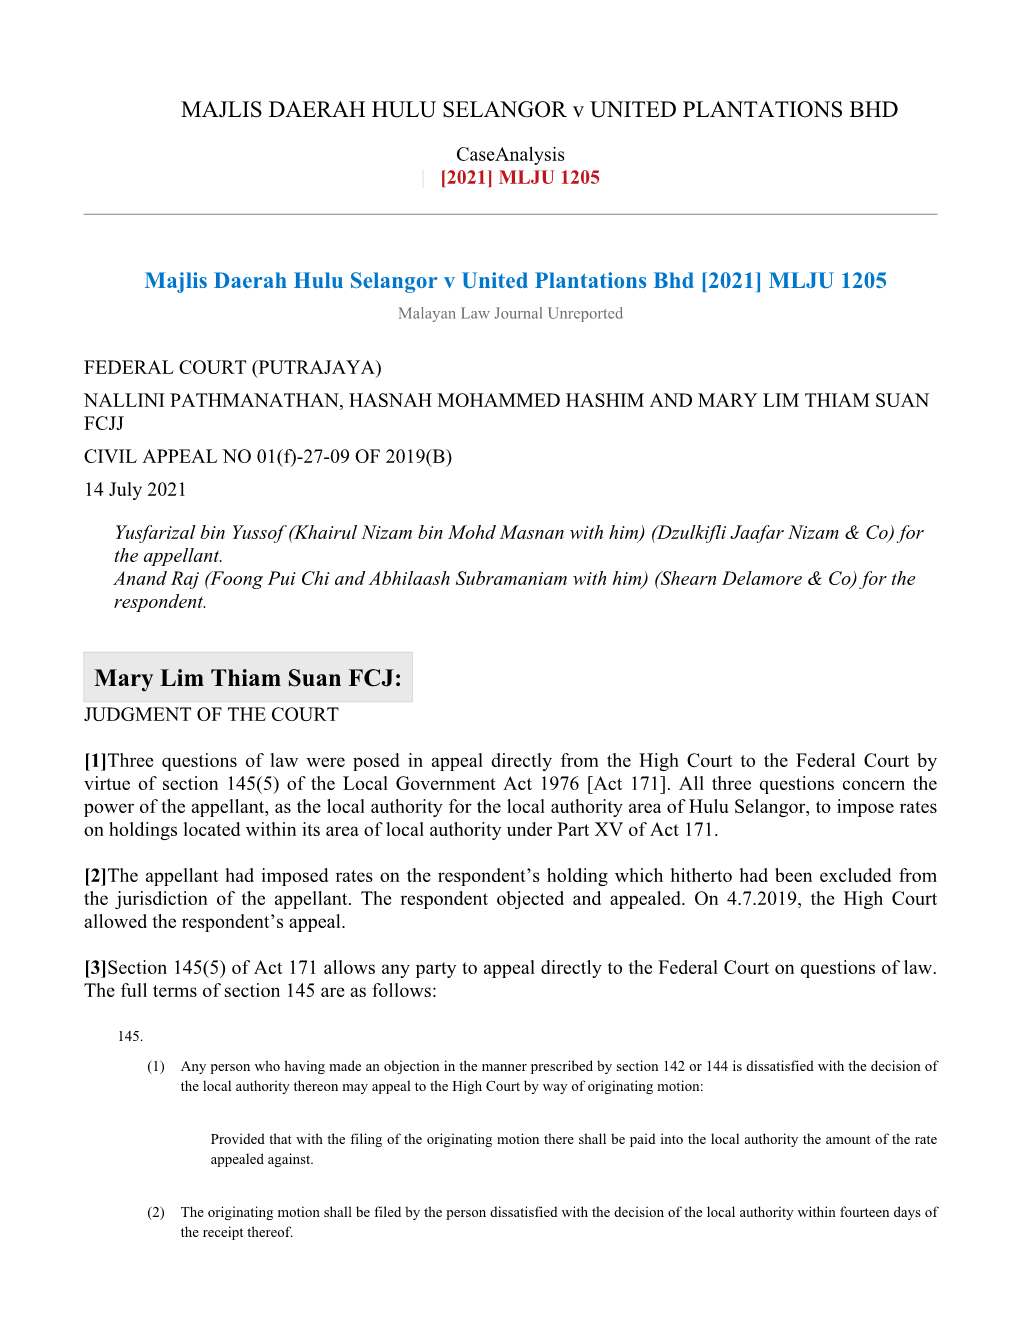 Majlis Daerah Hulu Selangor V United Plantations Bhd [2021] MLJU 1205 Malayan Law Journal Unreported